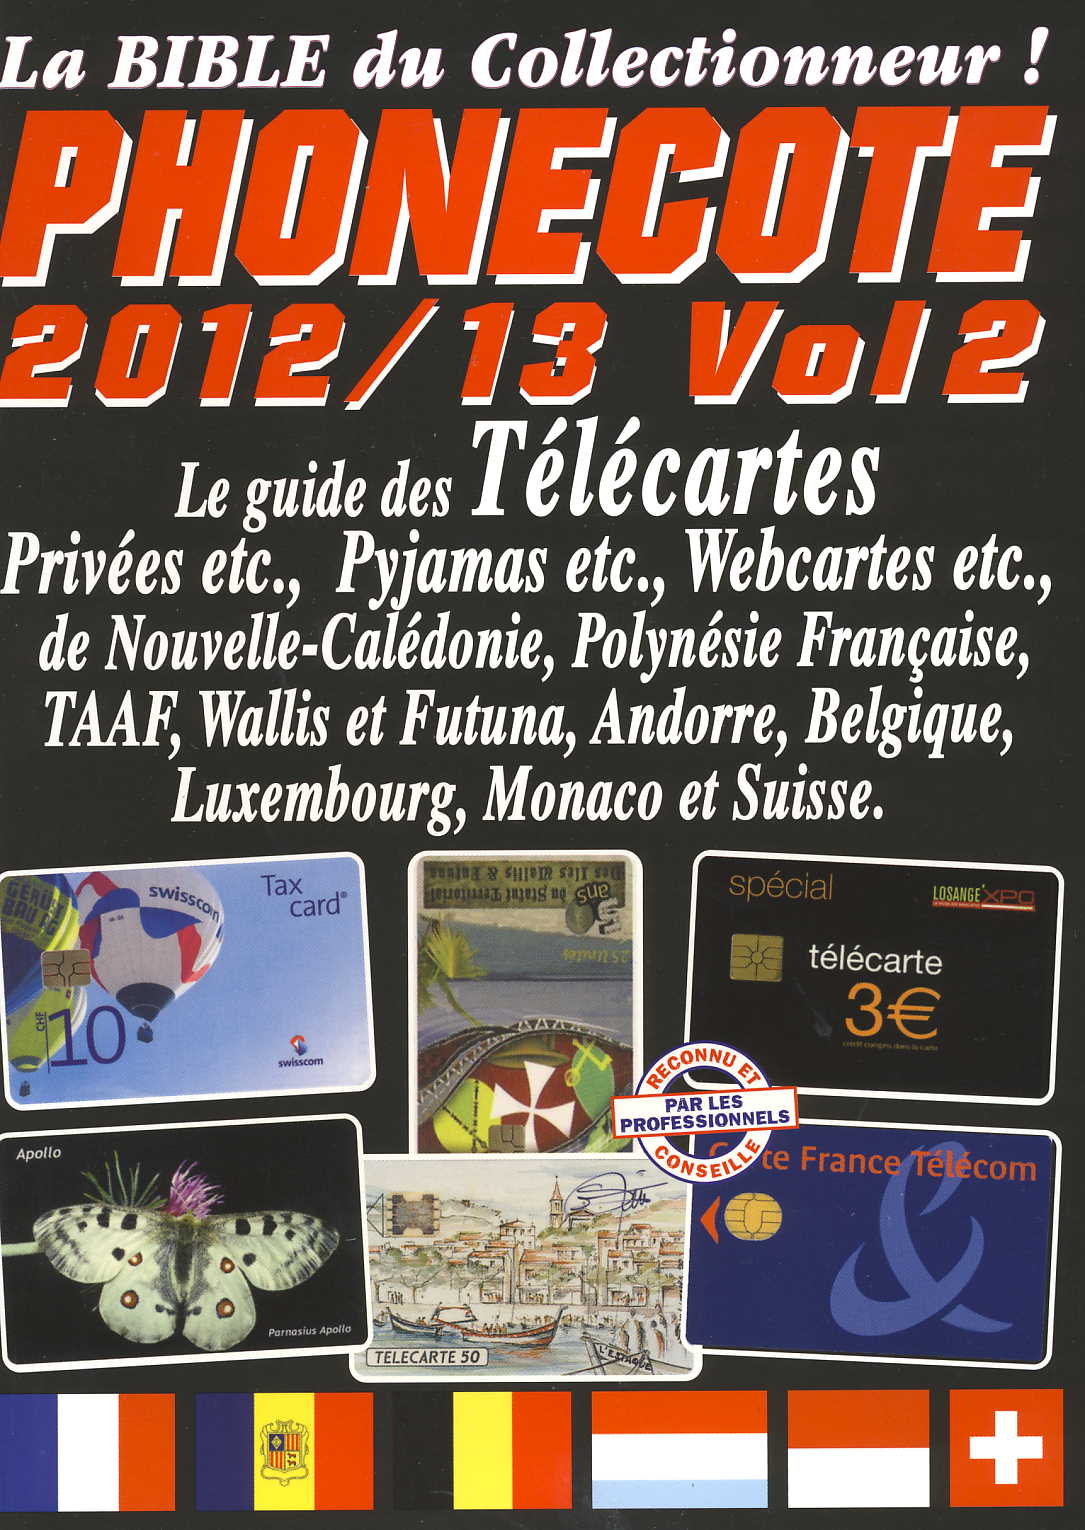 SARL INFOPUCE Phonecote 2012/13 Vol. 2